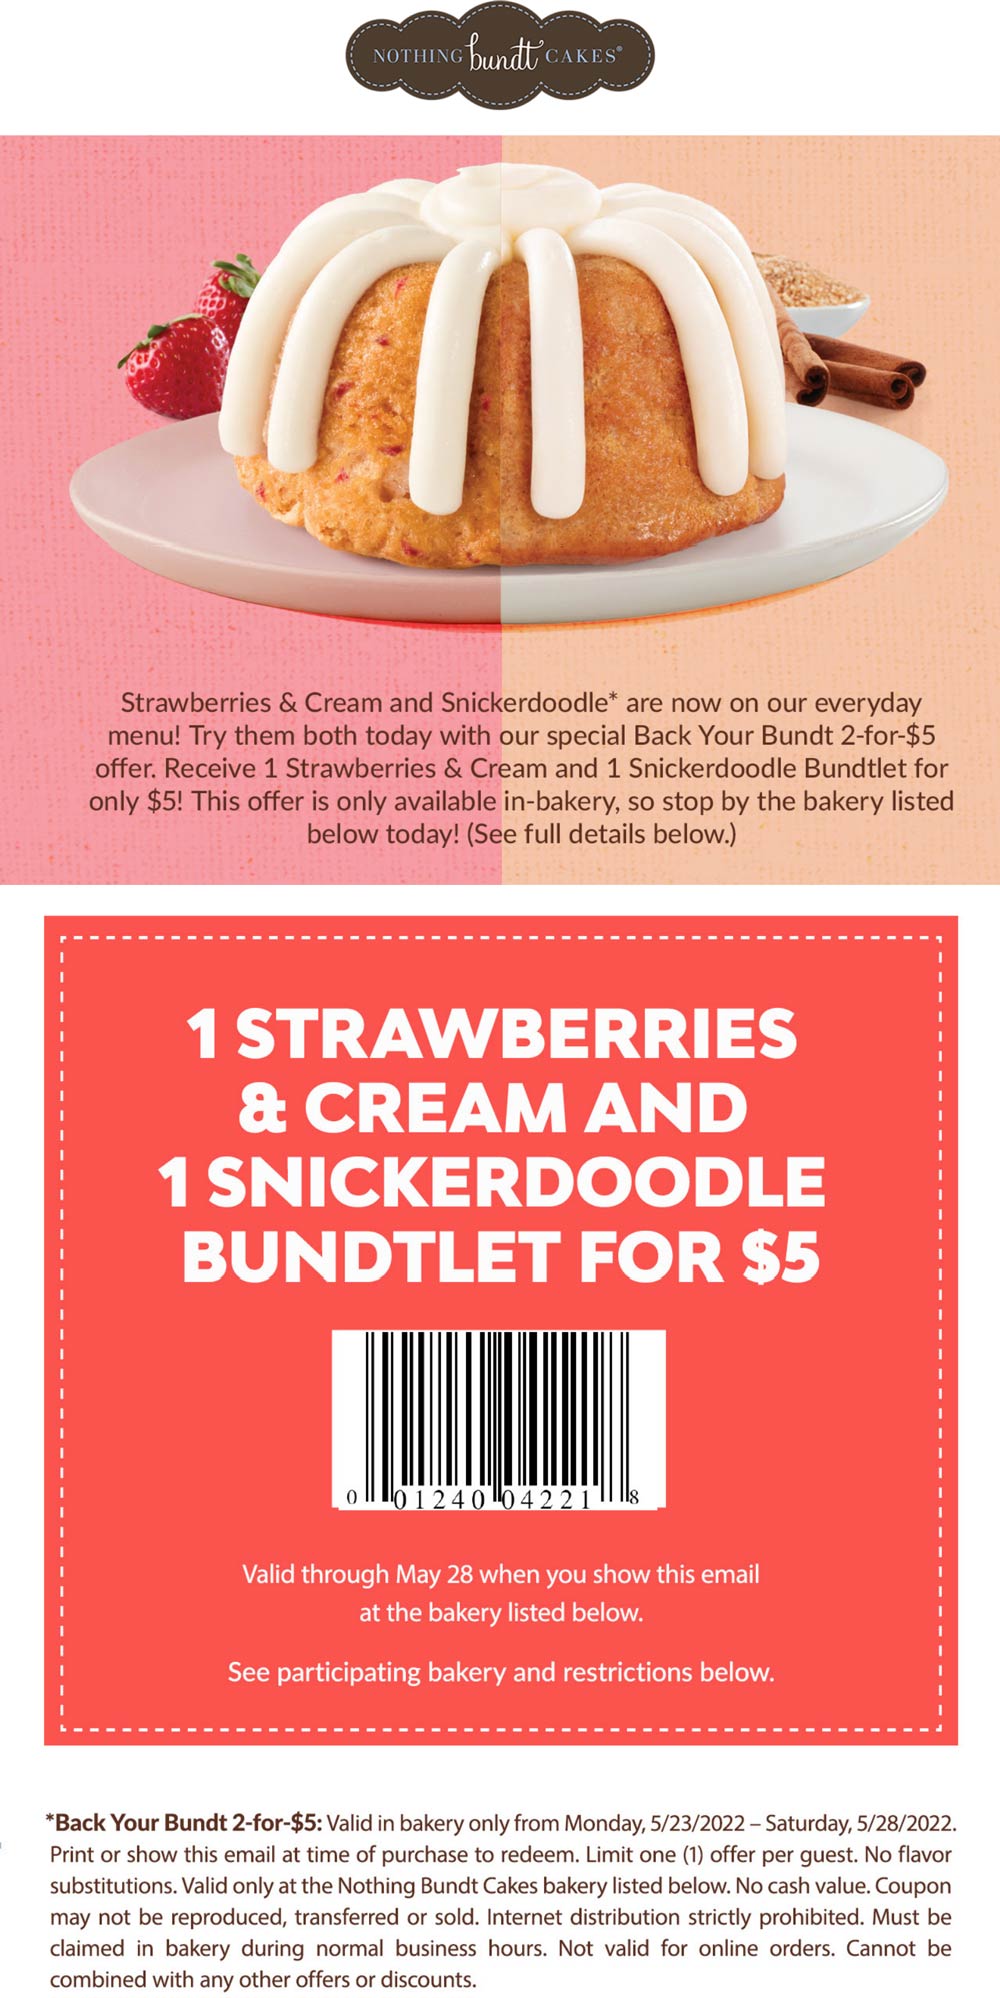 Strawberries & cream + Snickerdoodle dessert cakes = 5 at Nothing